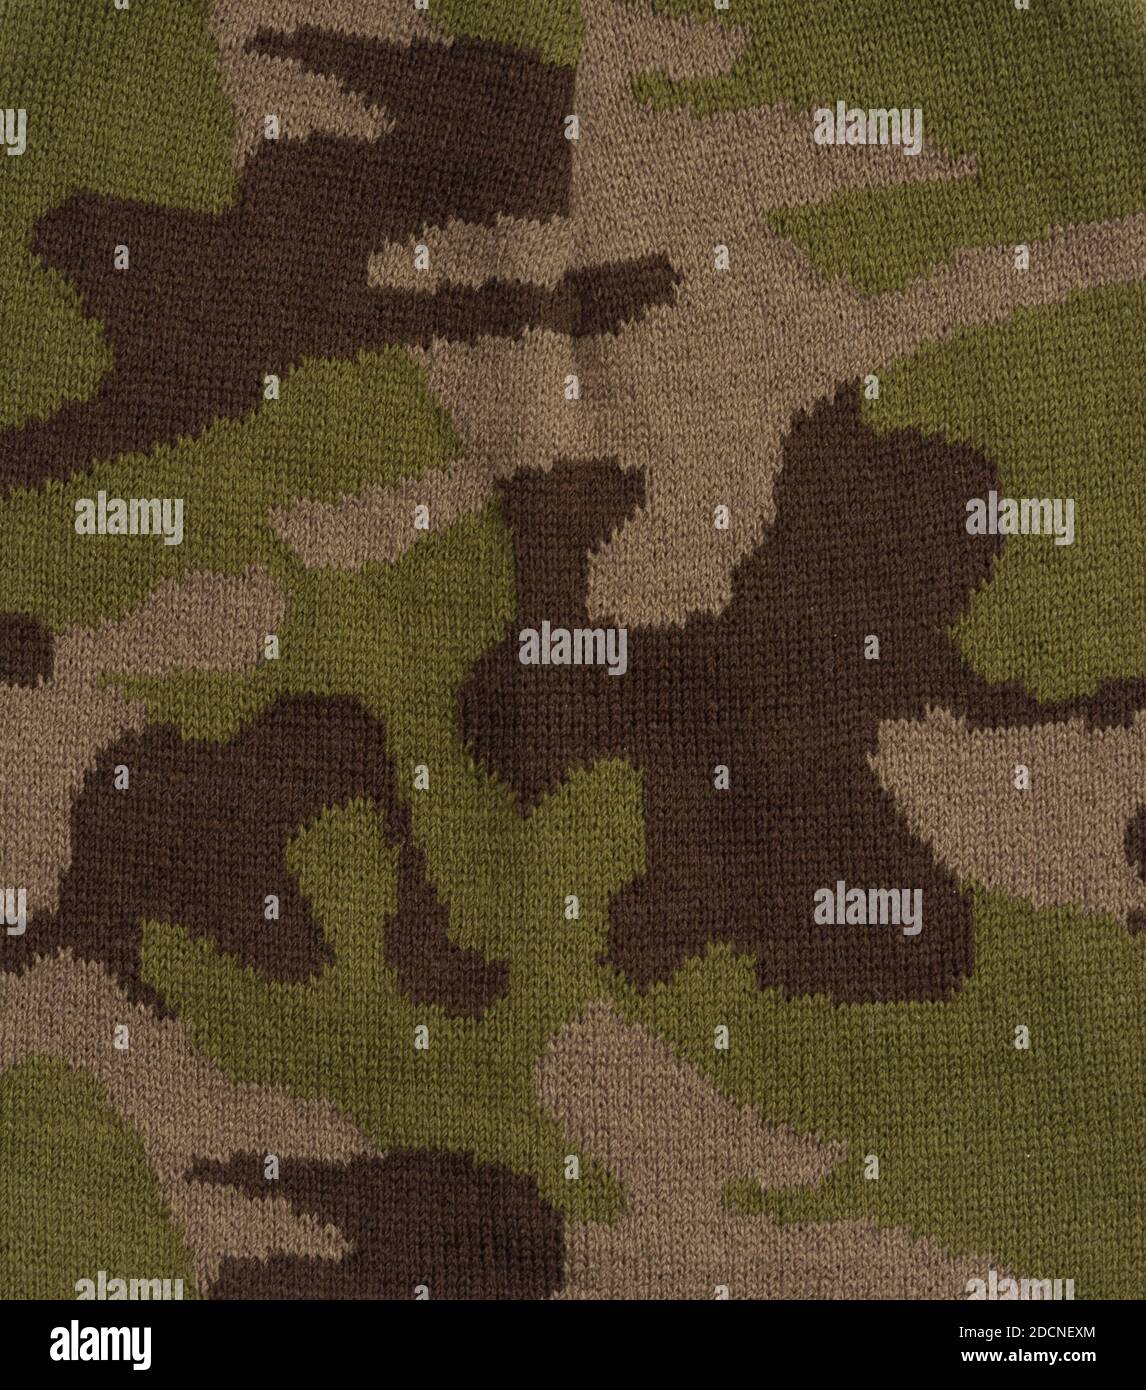 Camouflage pattern cotton fabric texture Stock Photo - Alamy